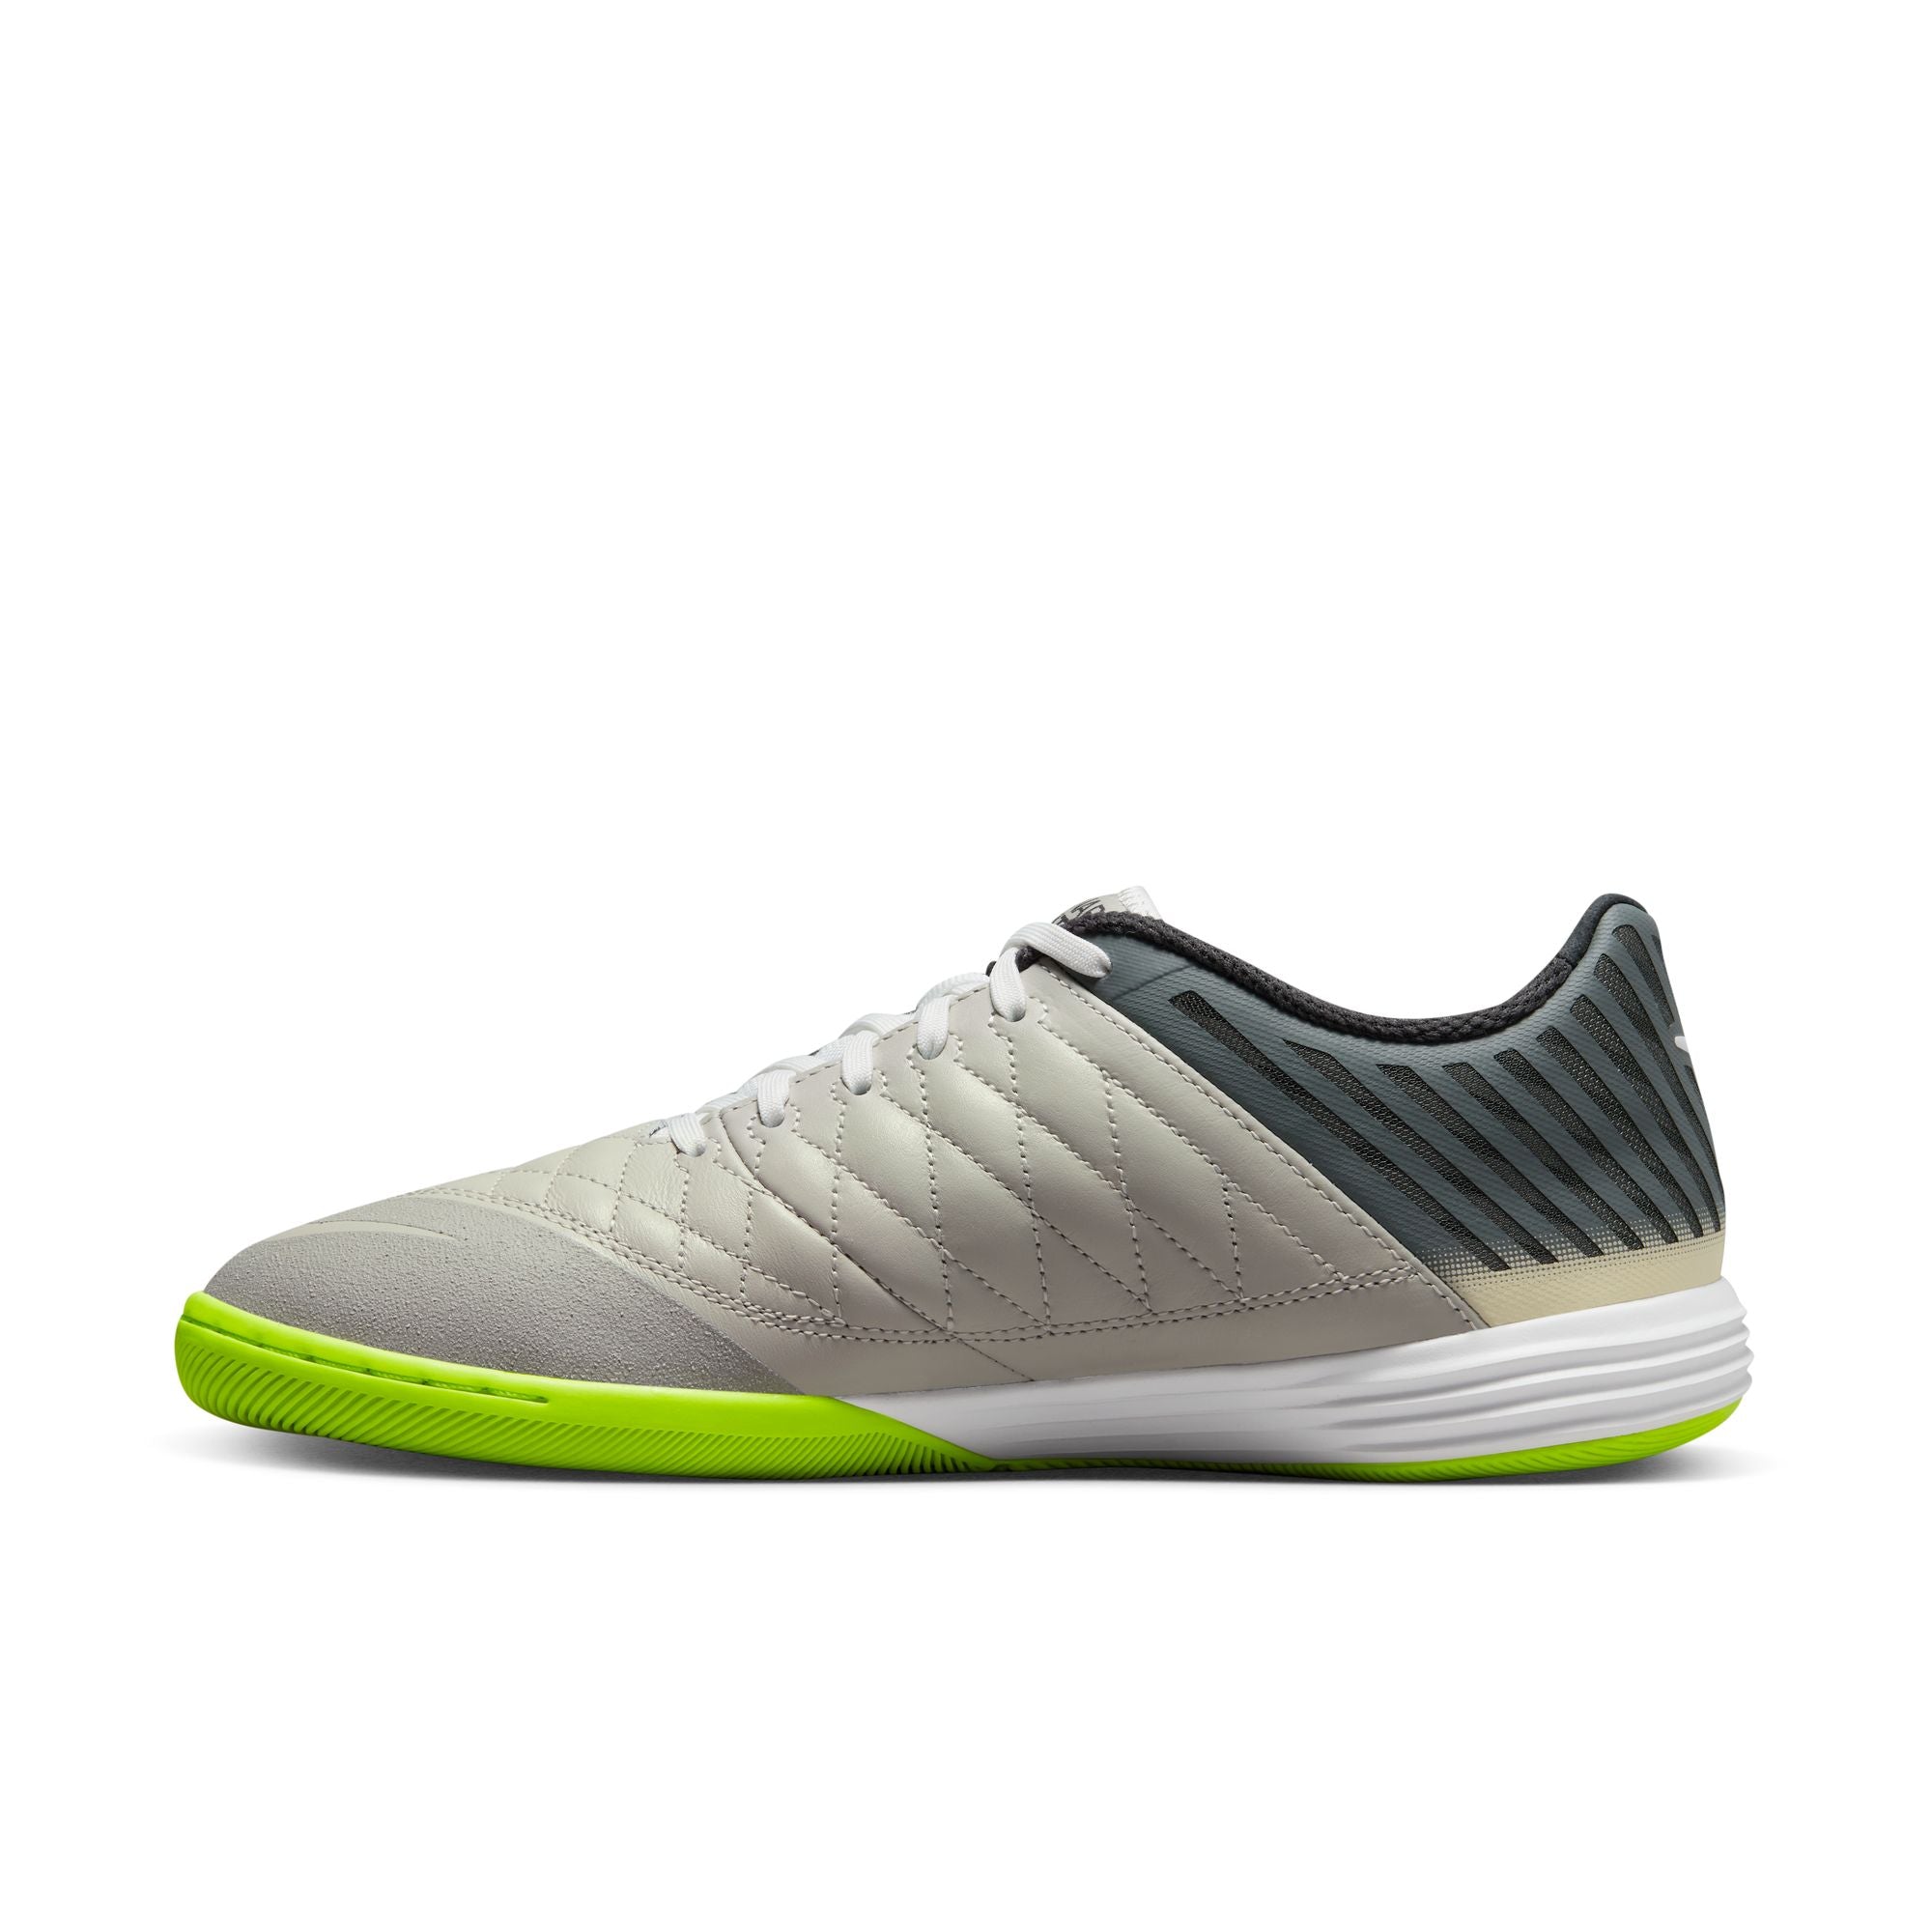 Nike Lunar Gato II IC Soccer Shoes